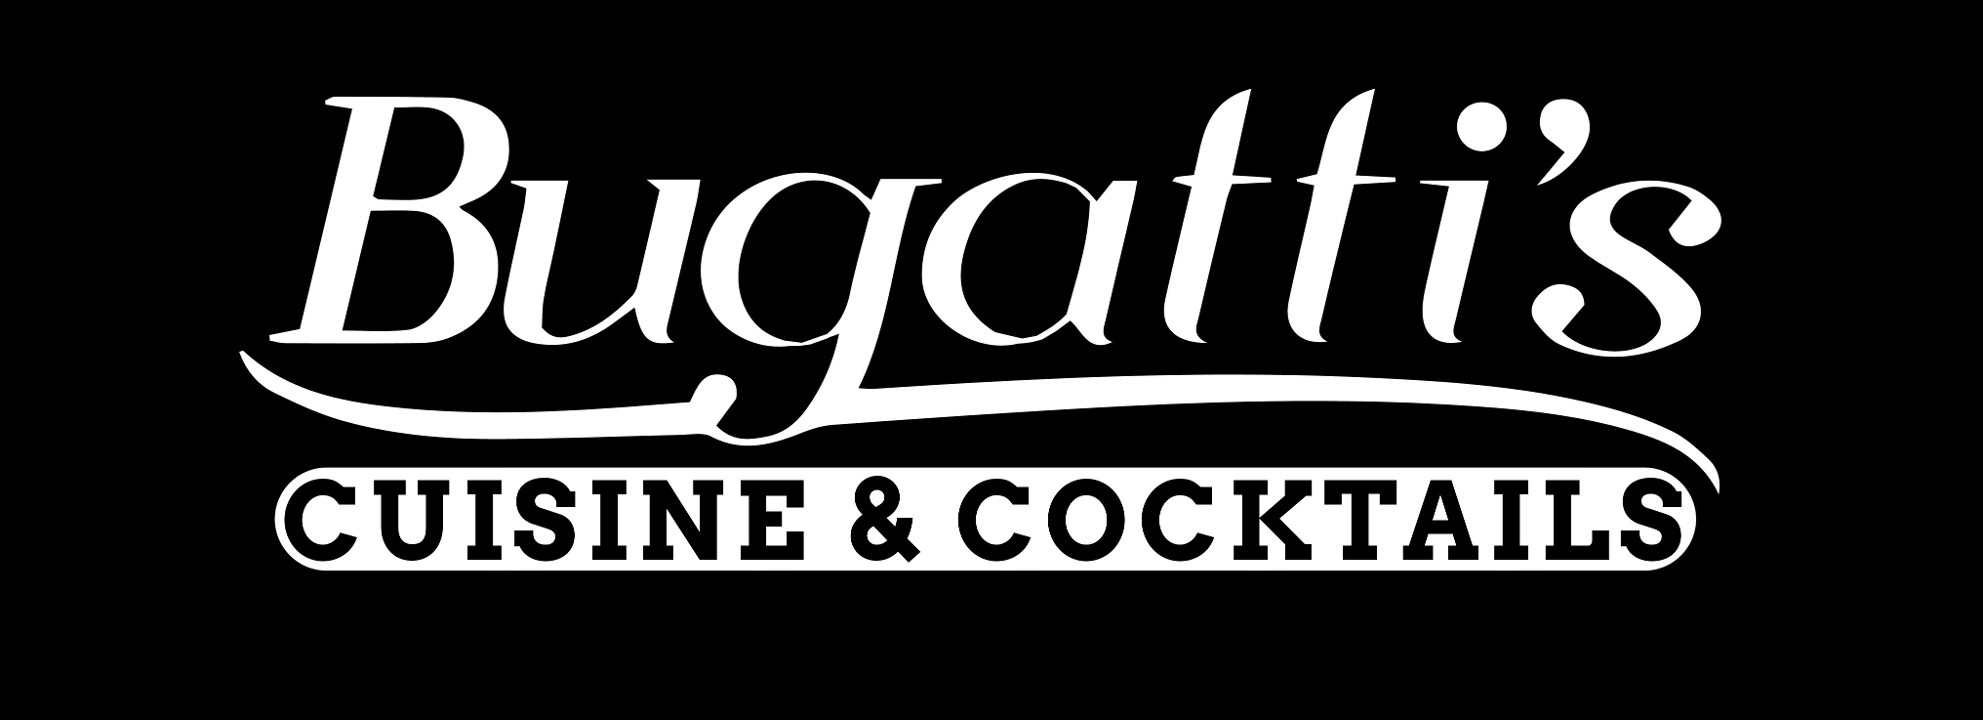 Bugattis Cuisine & Cocktails 